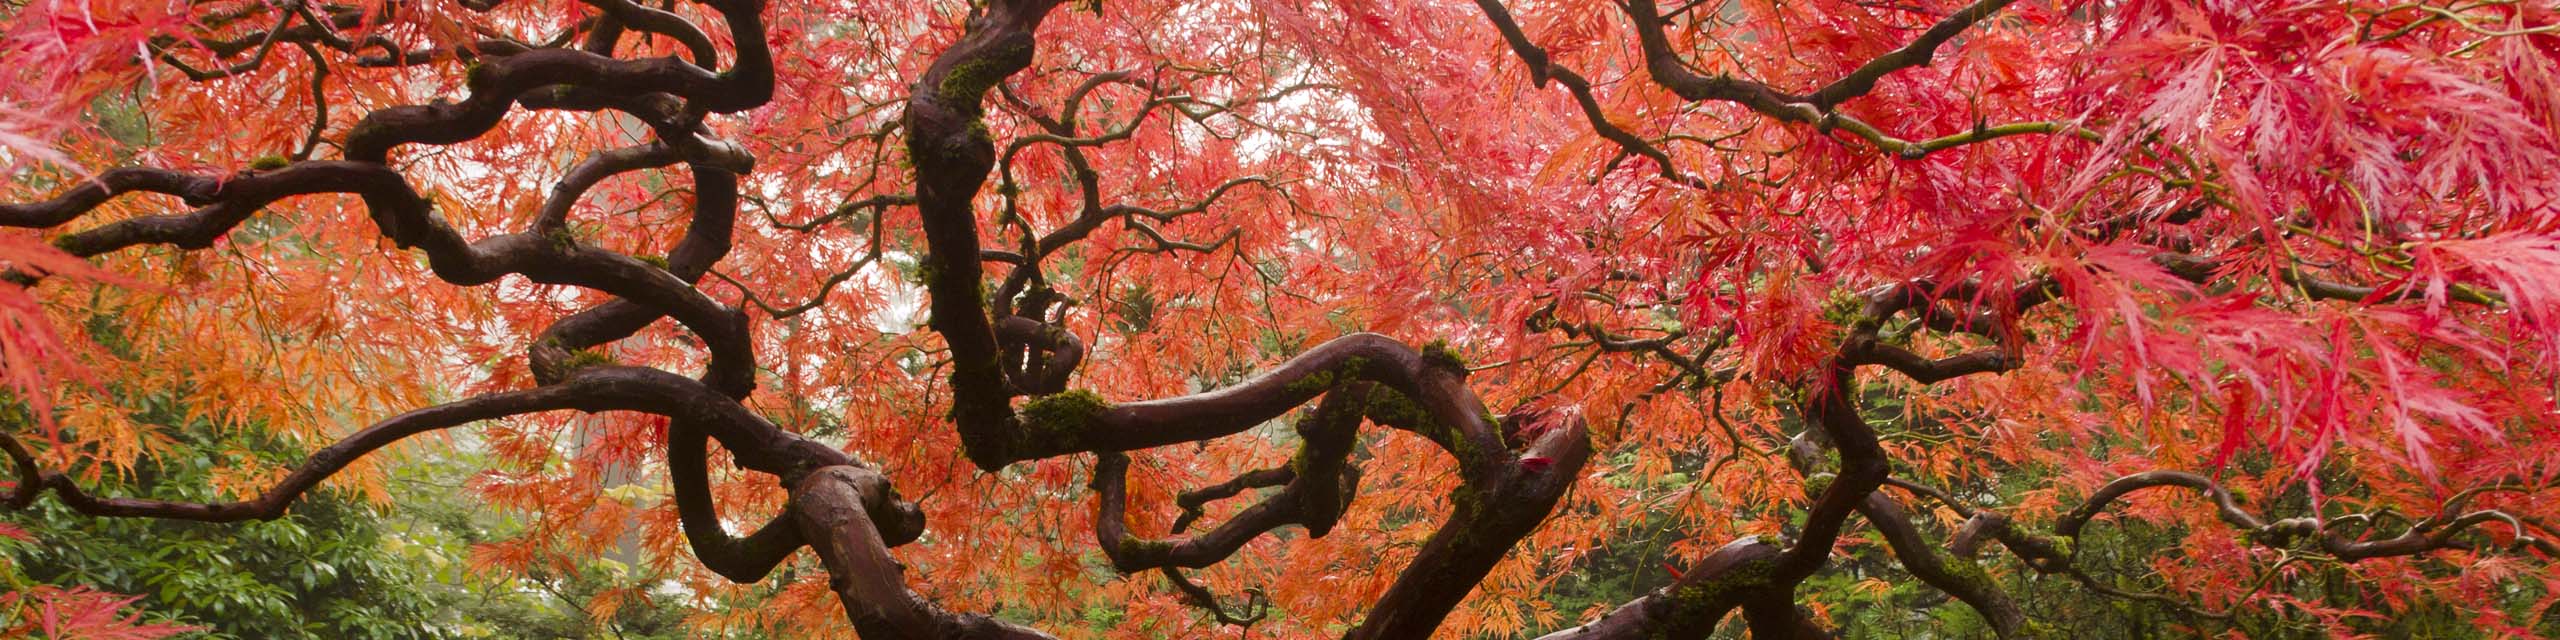 Large Japanese maple tree with red orange fall foliage.